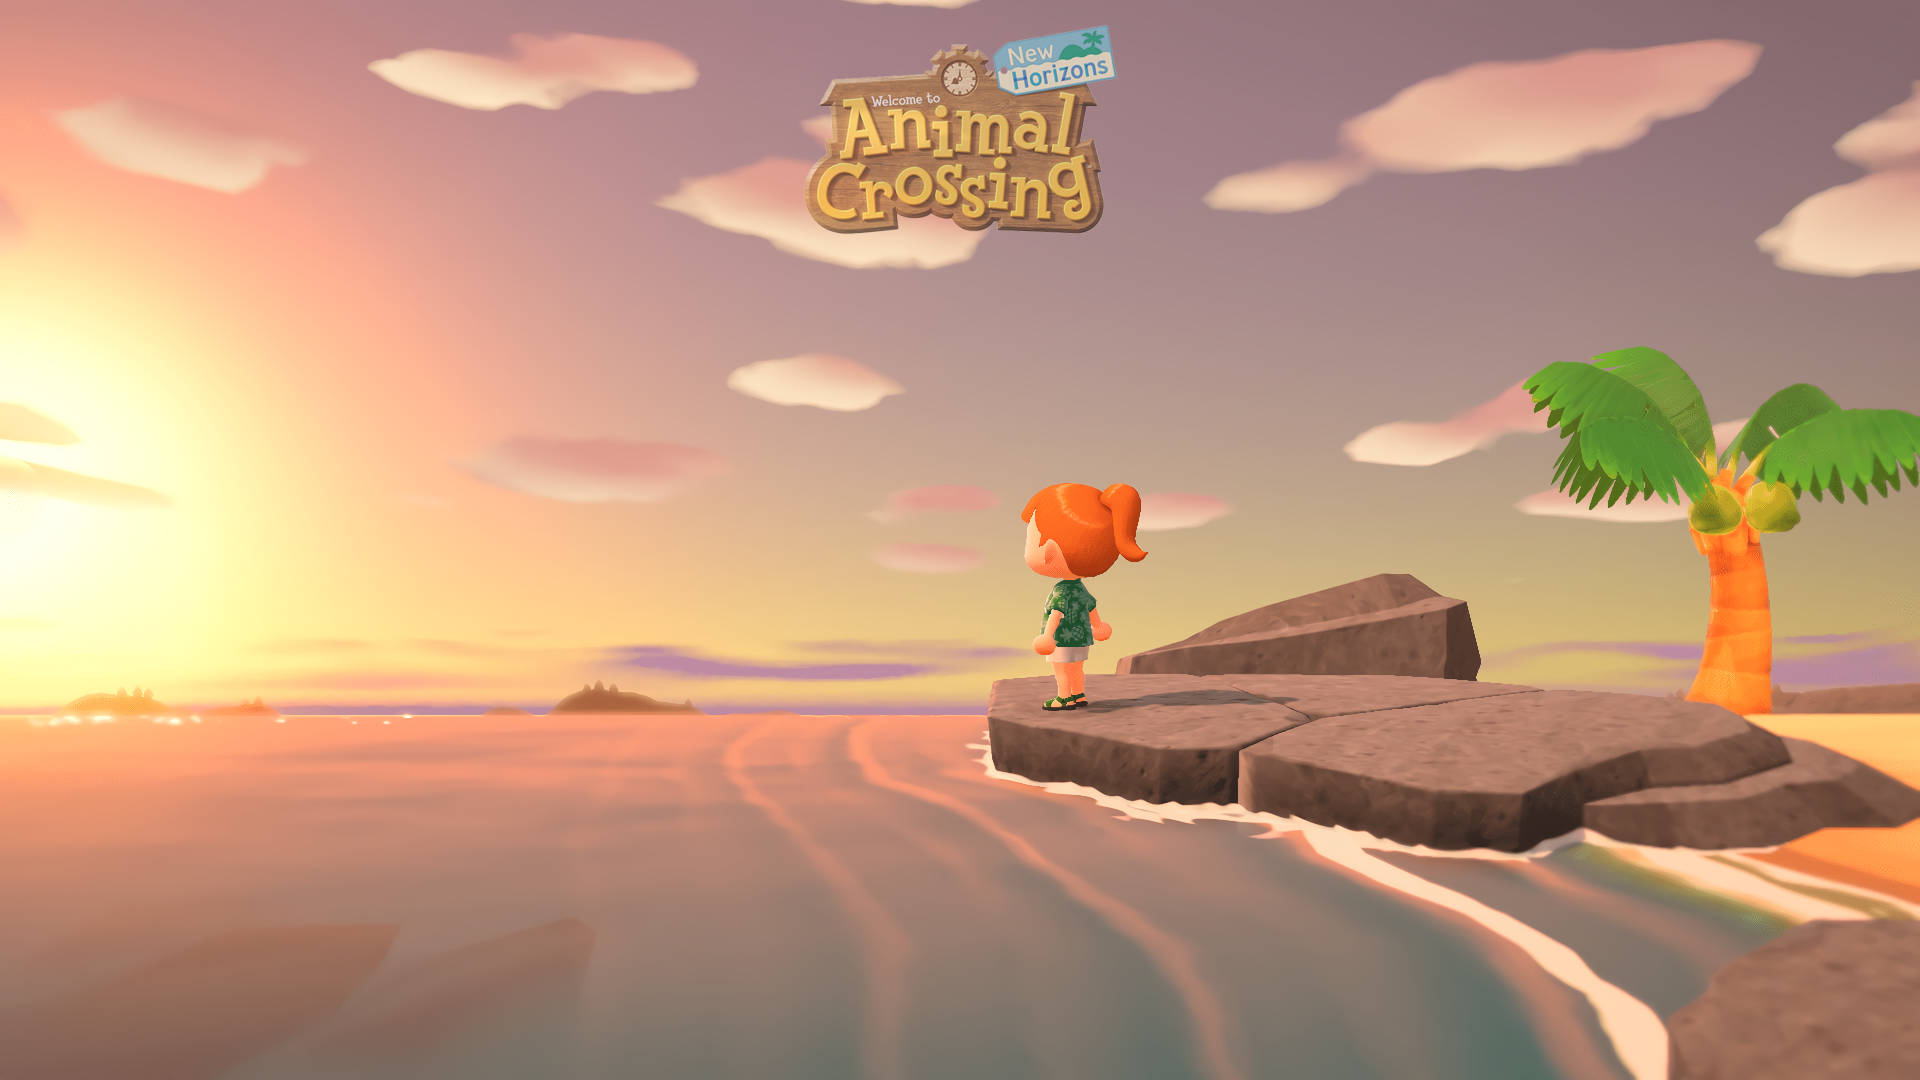 Hd Beautiful Sunset And Island Animal Crossing Wallpaper